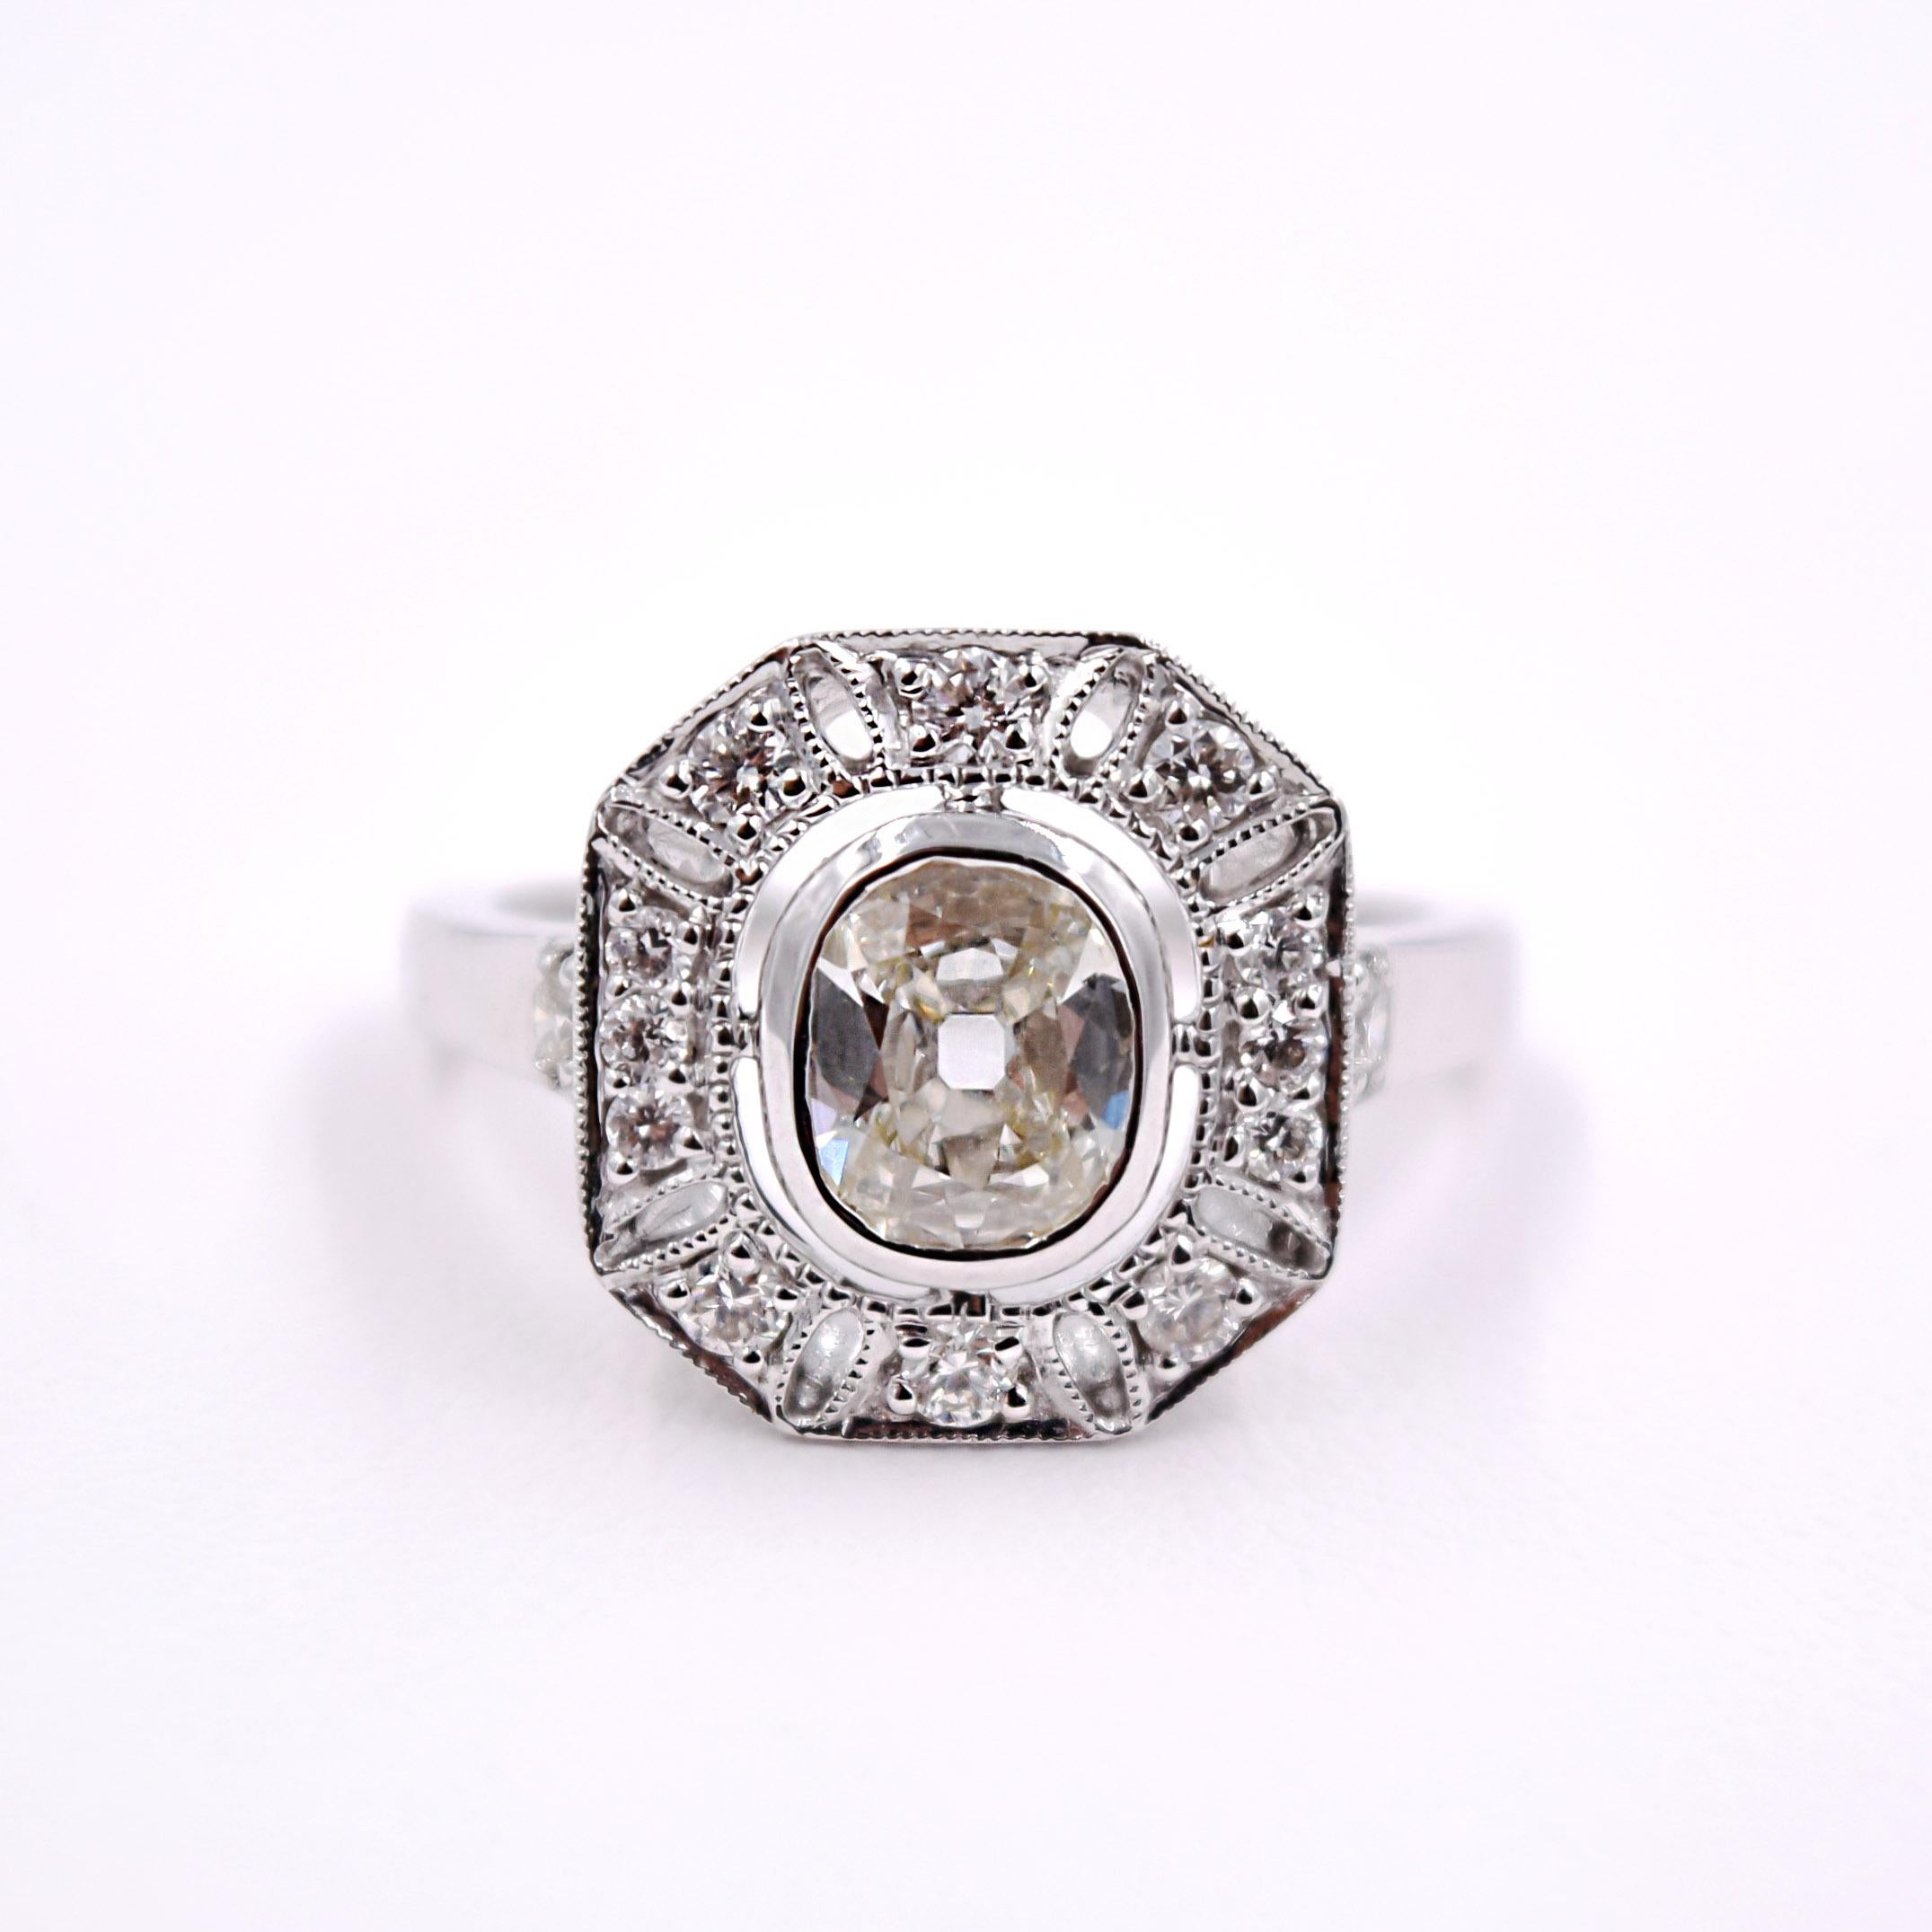 Sethi Couture White Diamond Ring
- White Oval Center Diamond with 14 Small Round Diamonds 1.20 Carats TDW
- 18 Karat White Gold
- Size 6.5 and can be sized
